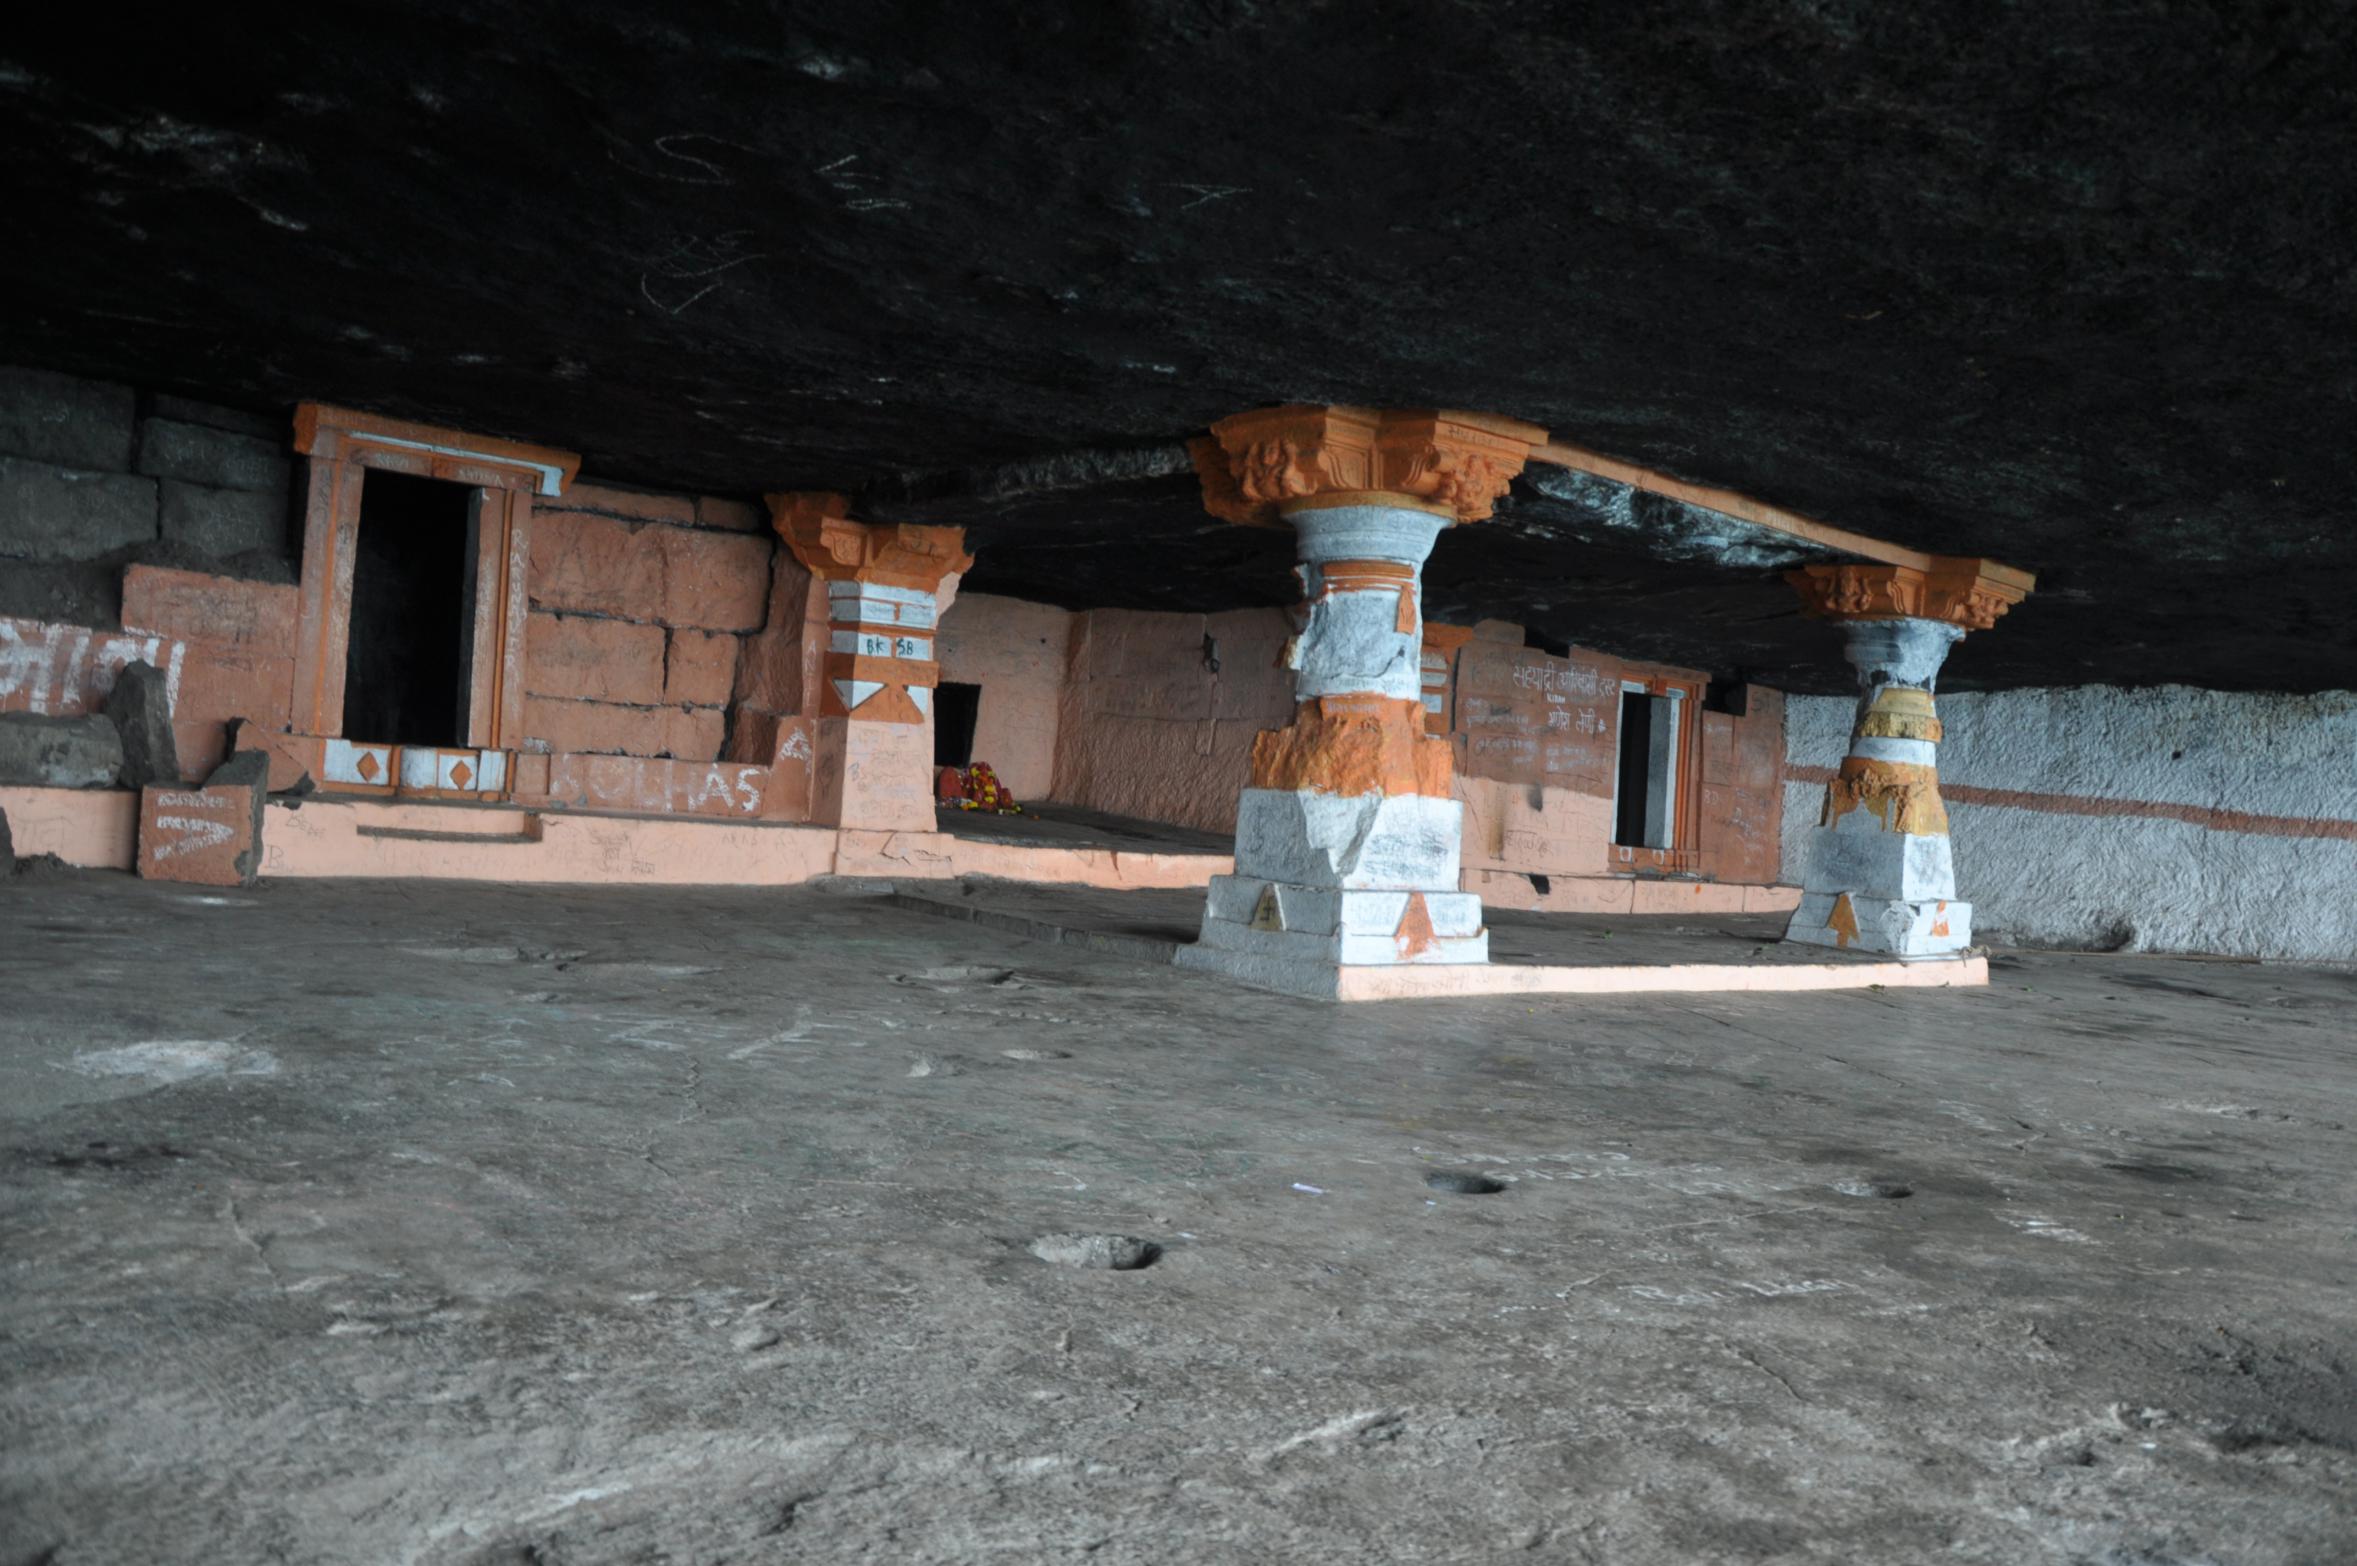 Ganpati Gadad, Caves in Maharashtra